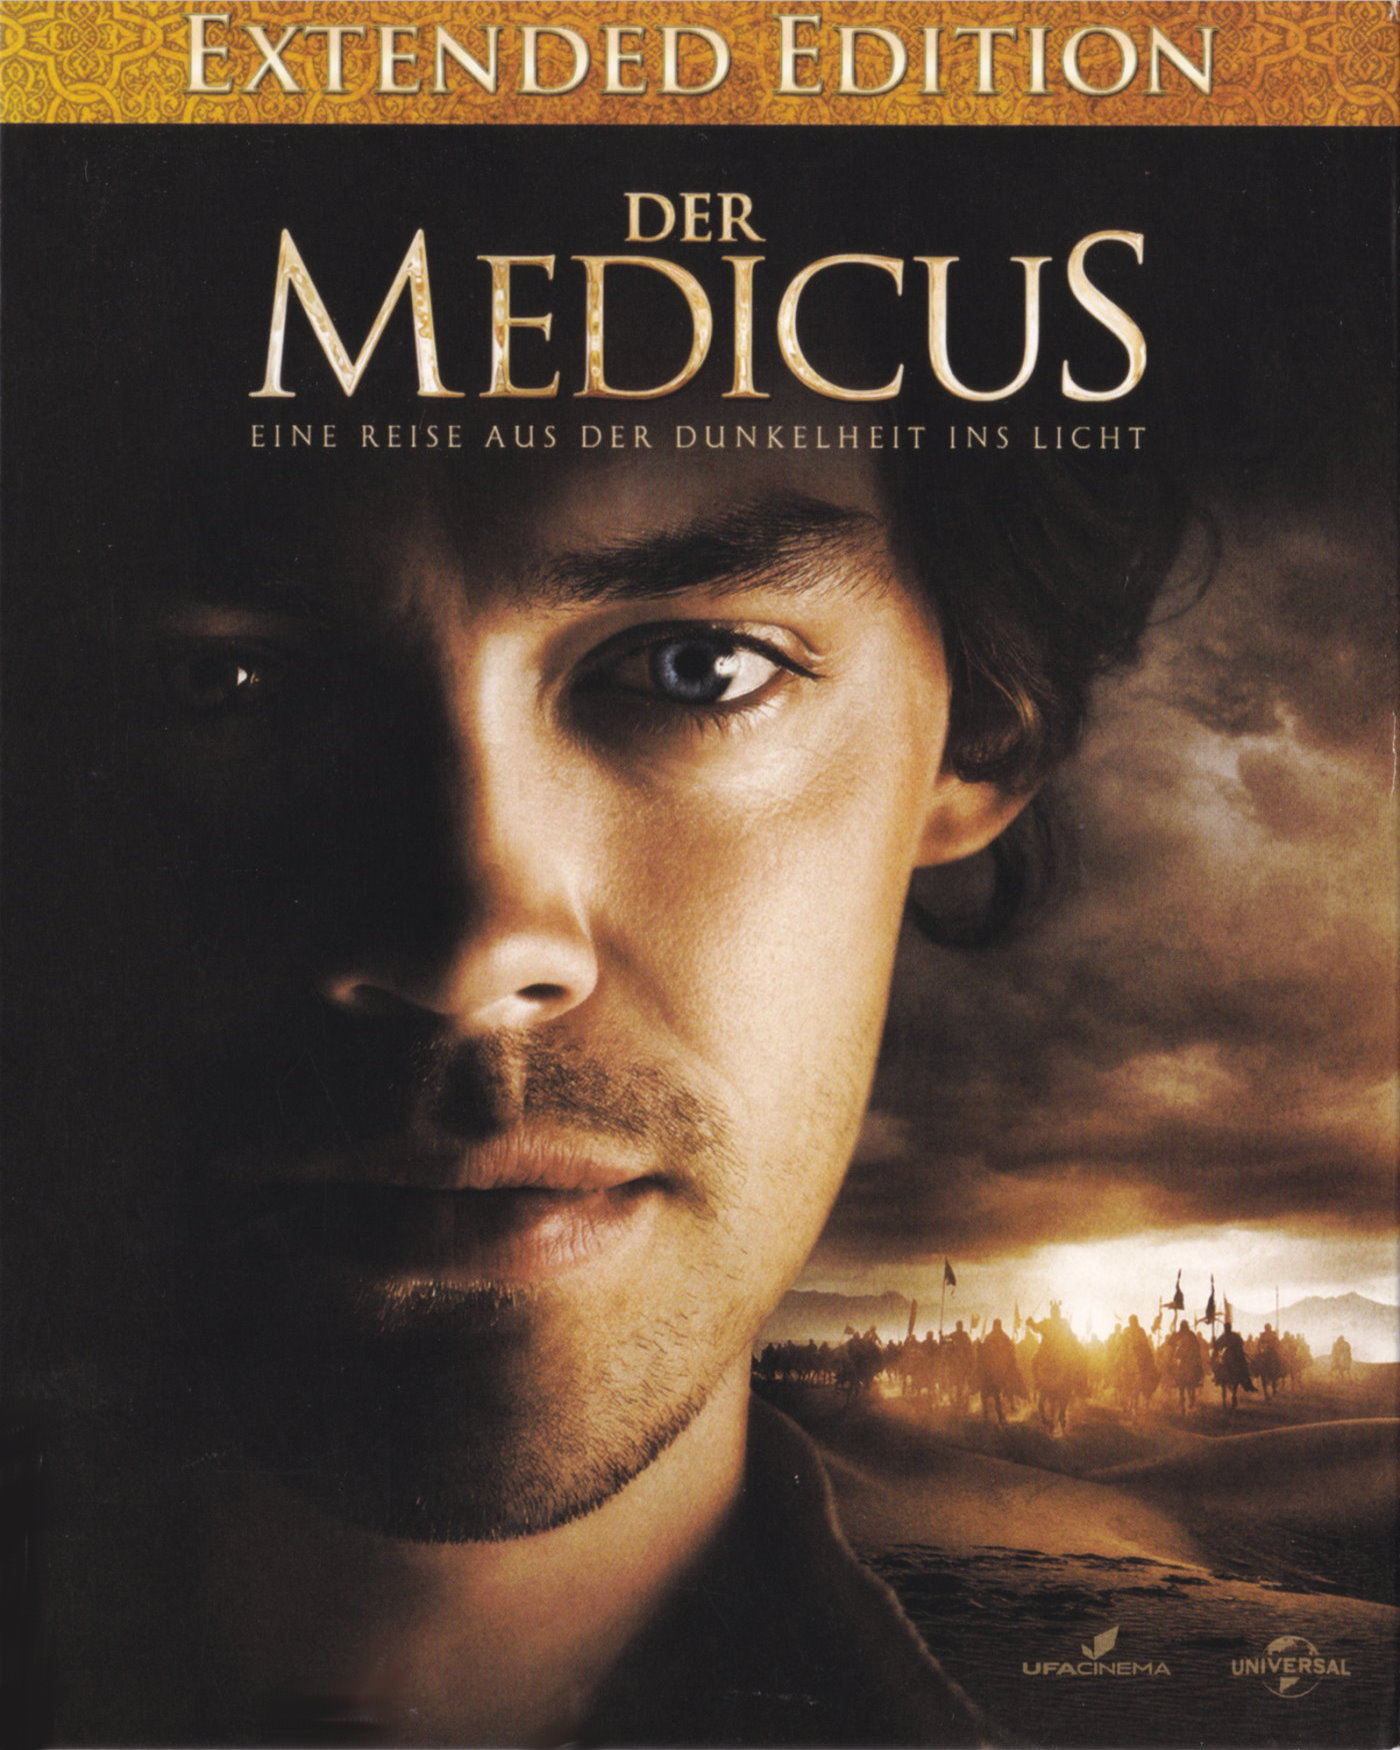 Cover - Der Medicus.jpg